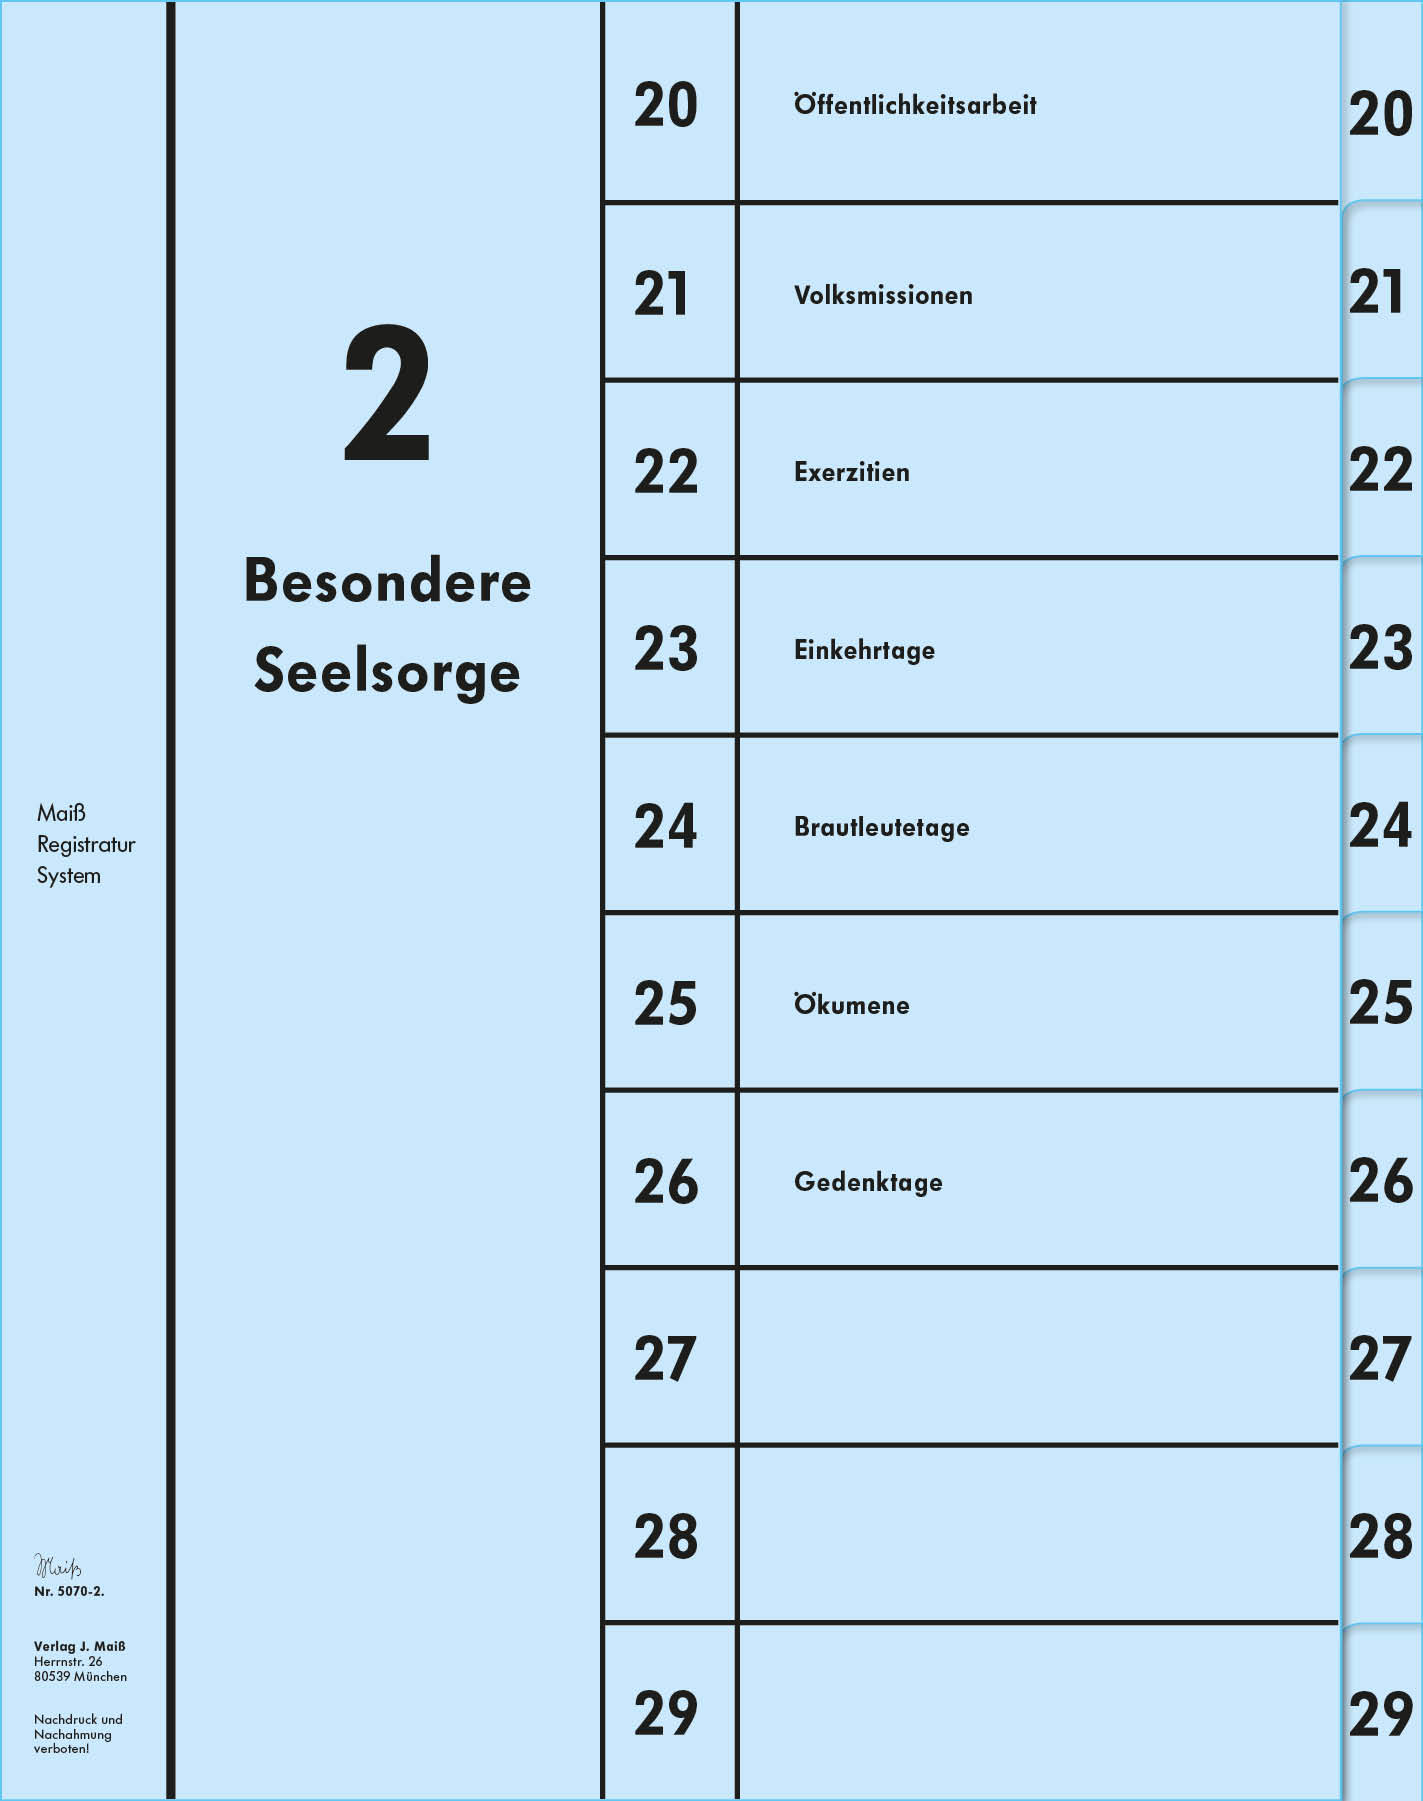 Register Gruppe 2 (20-29) Besondere Seelsorge